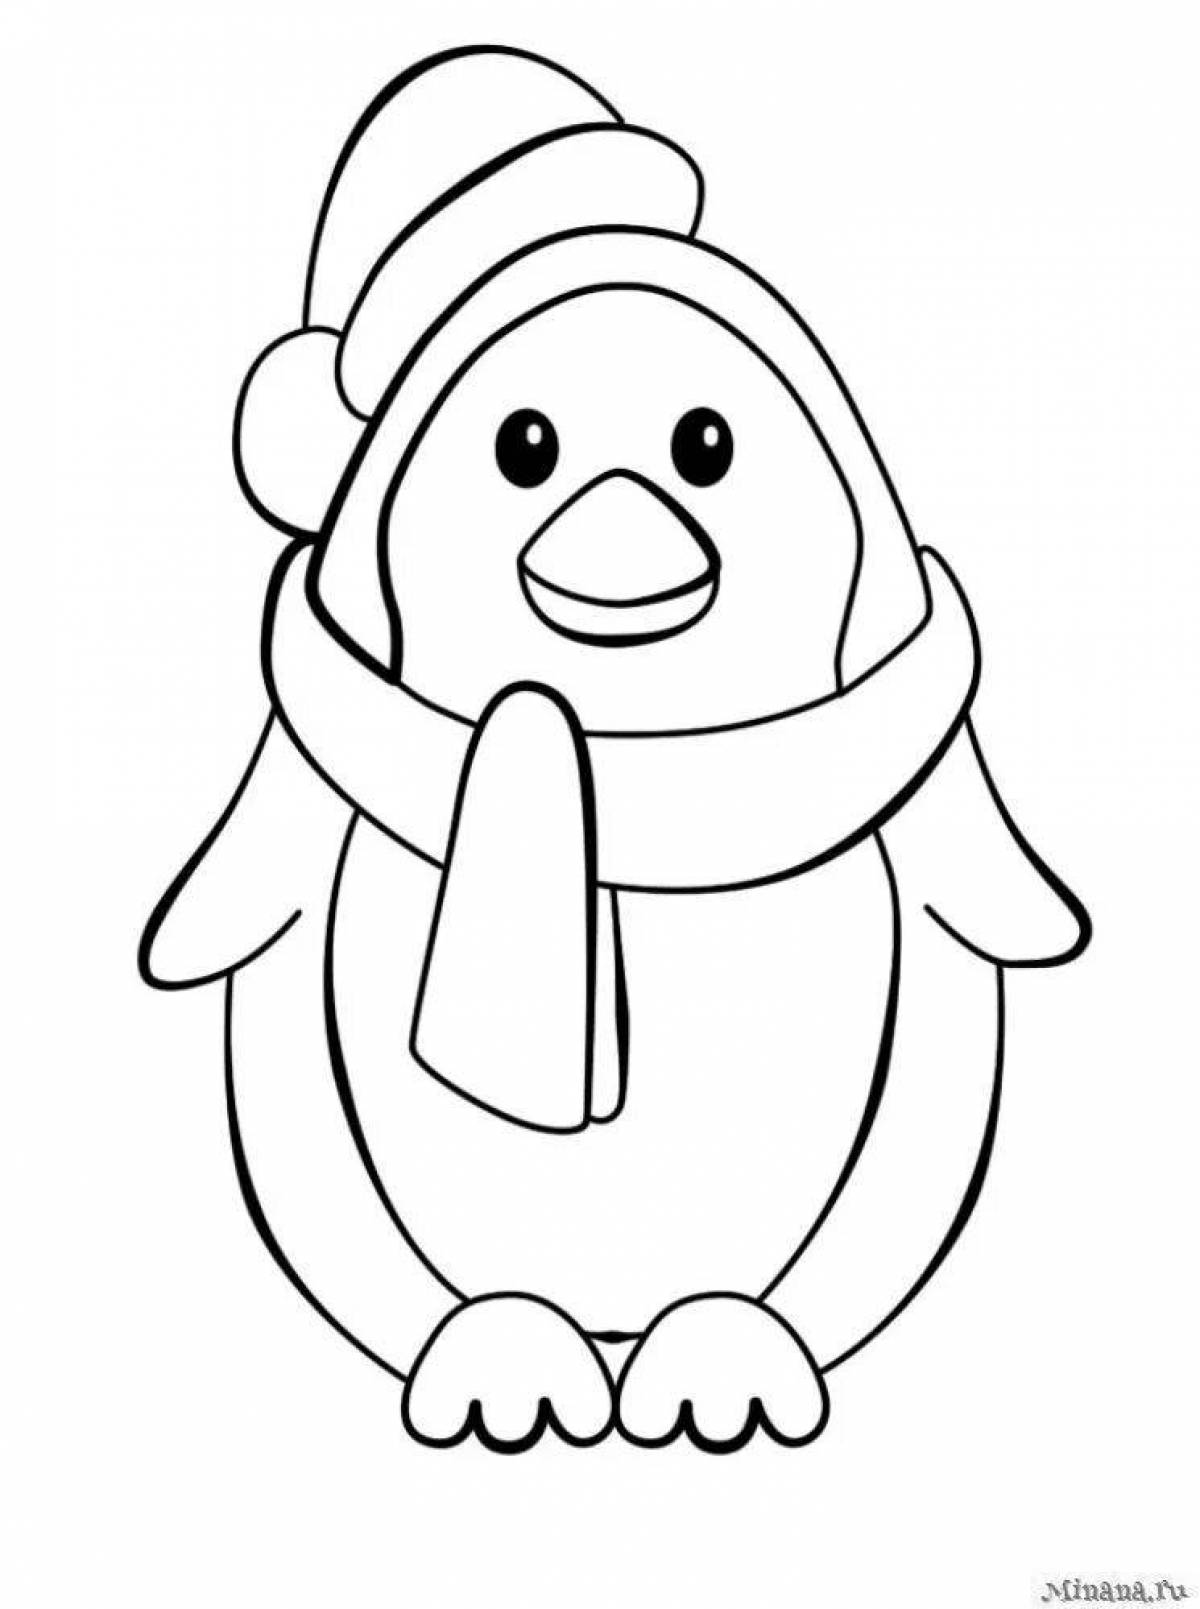 Coloring page joyful penguin